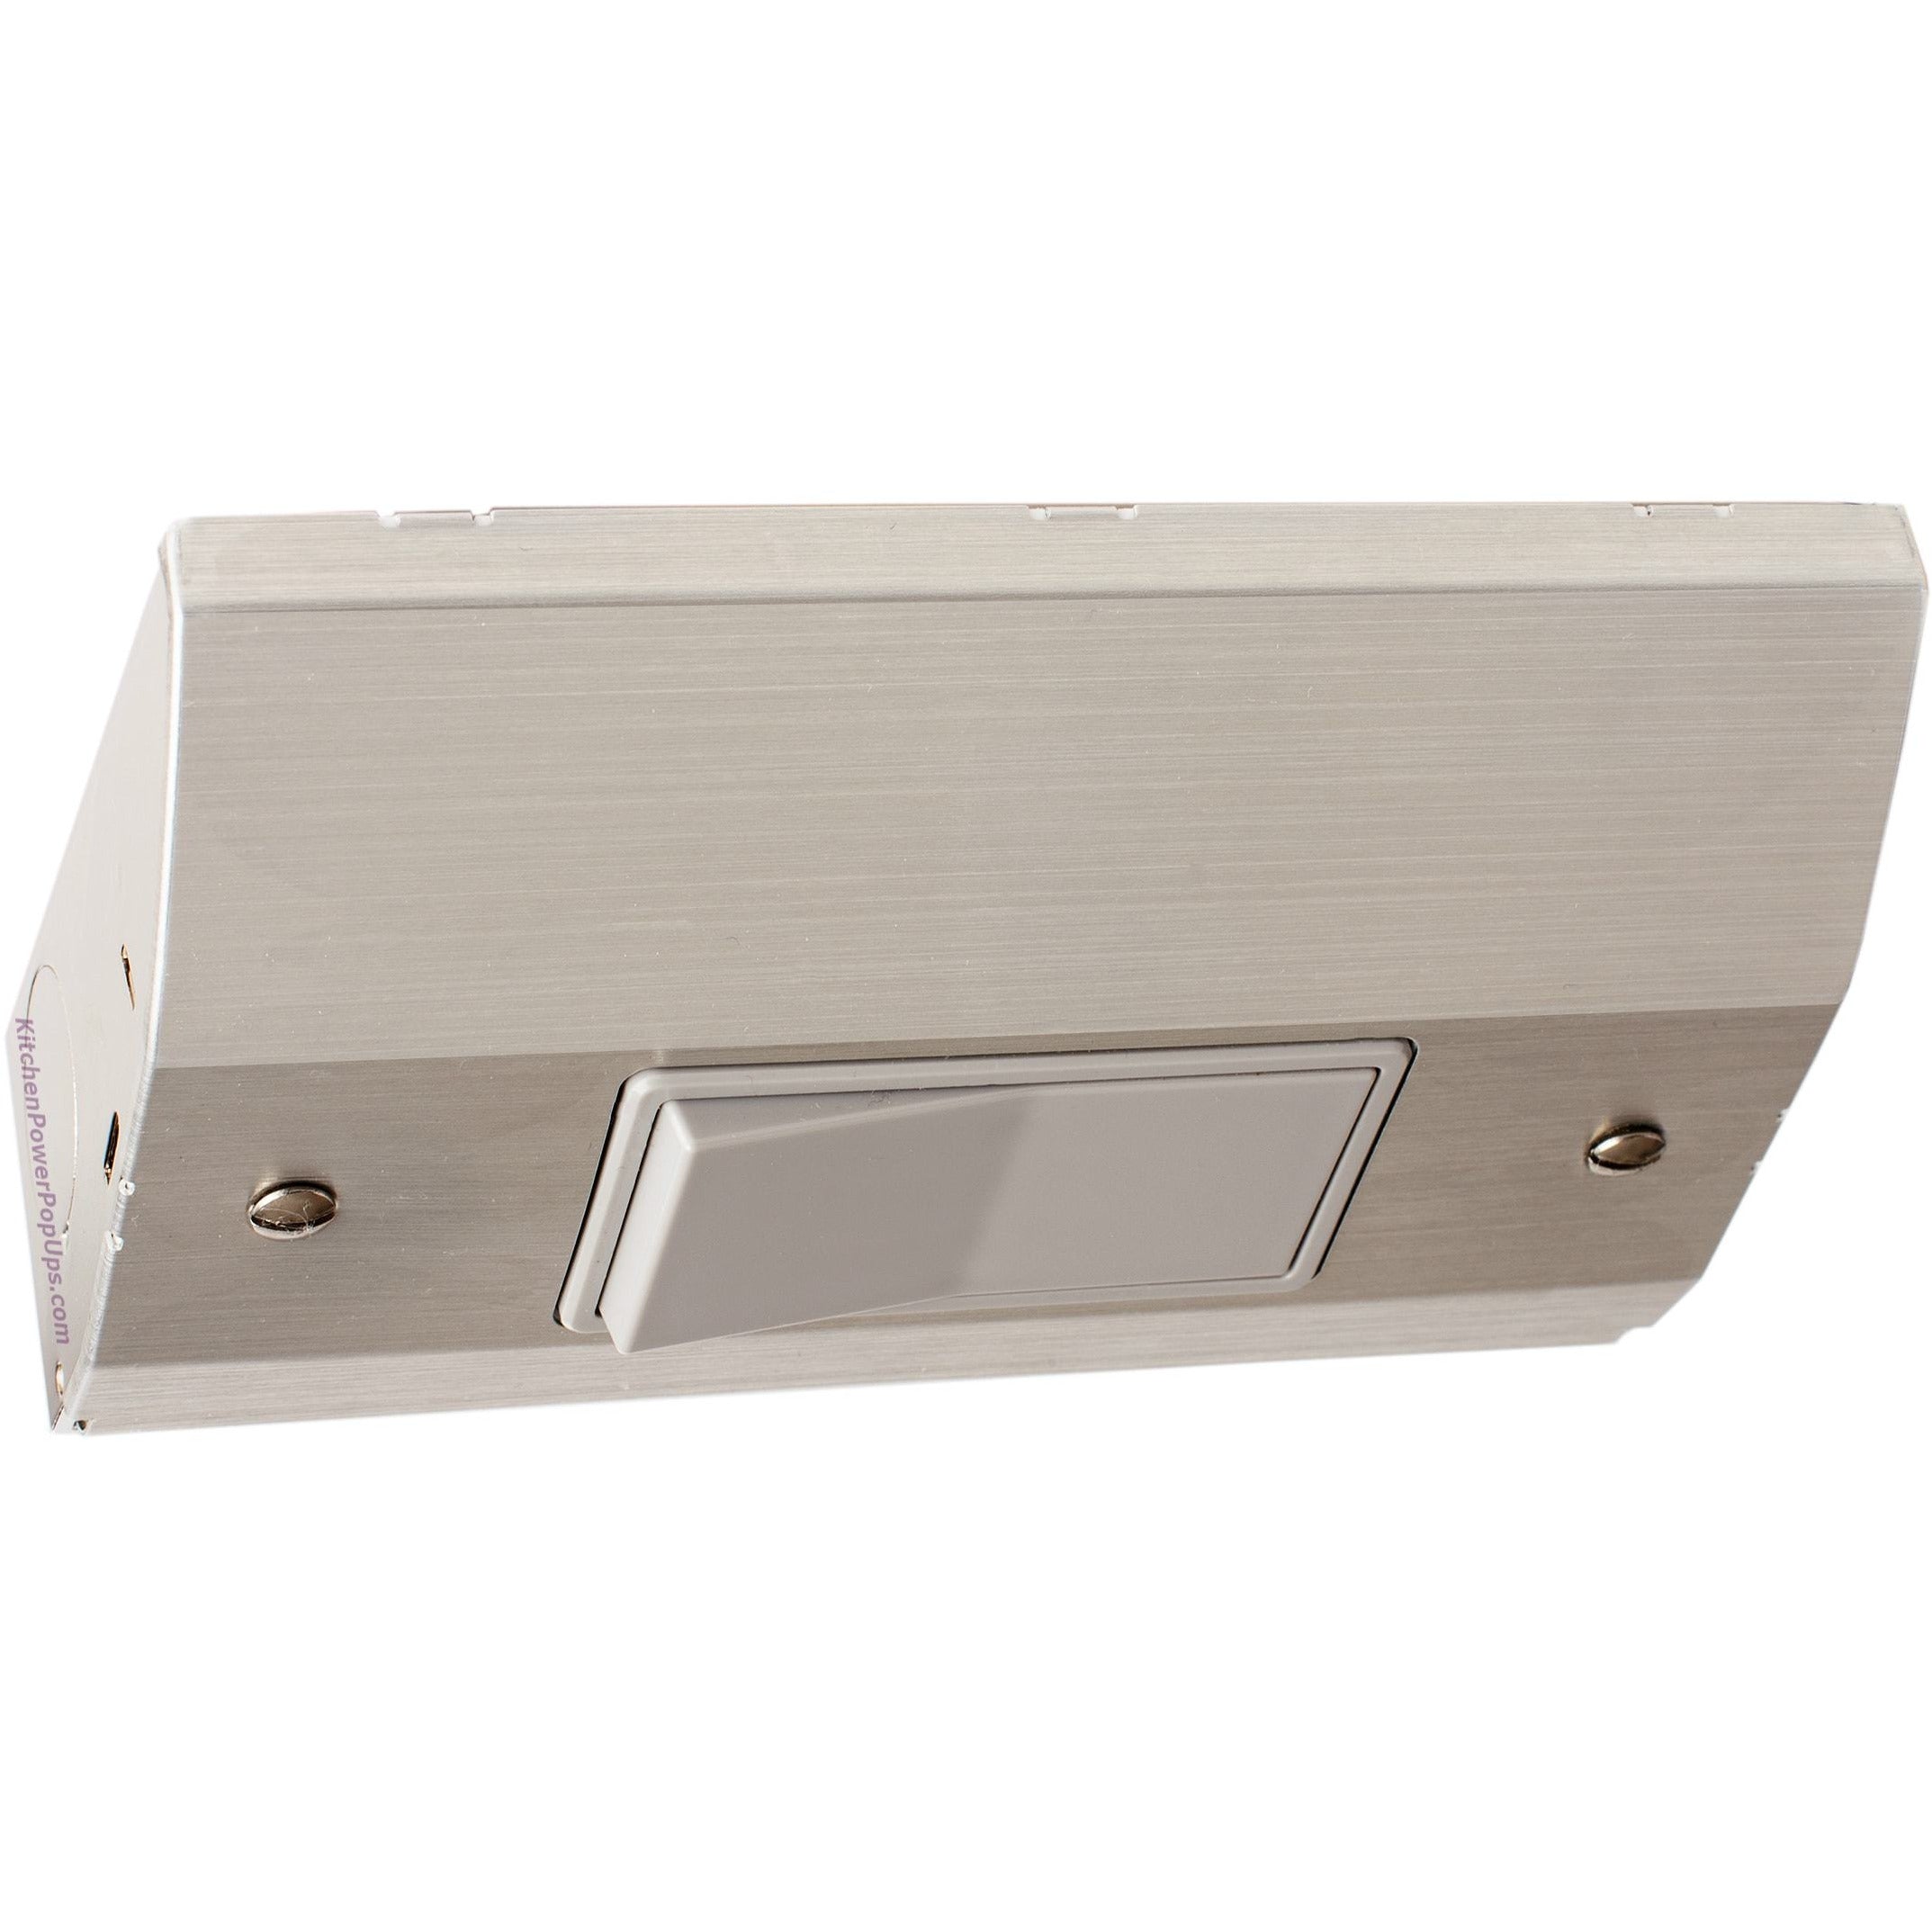 Under Cabinet Light Switch Box Stainless ?v=1575919534